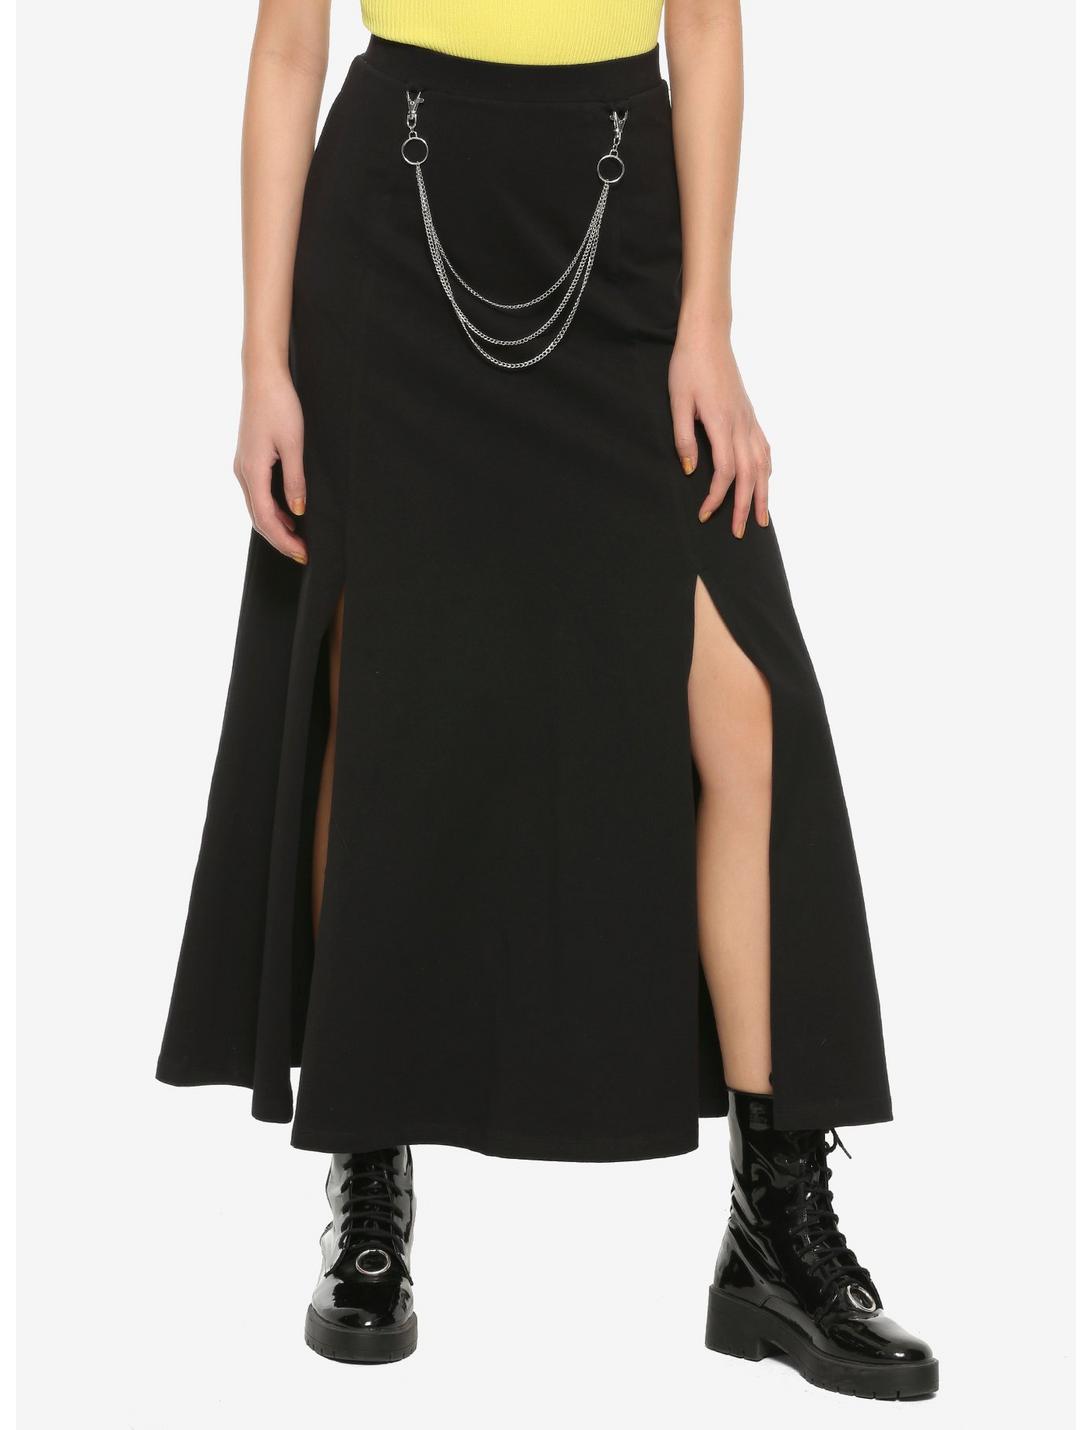 Chain & Double Slits Black Maxi Skirt, BLACK, hi-res